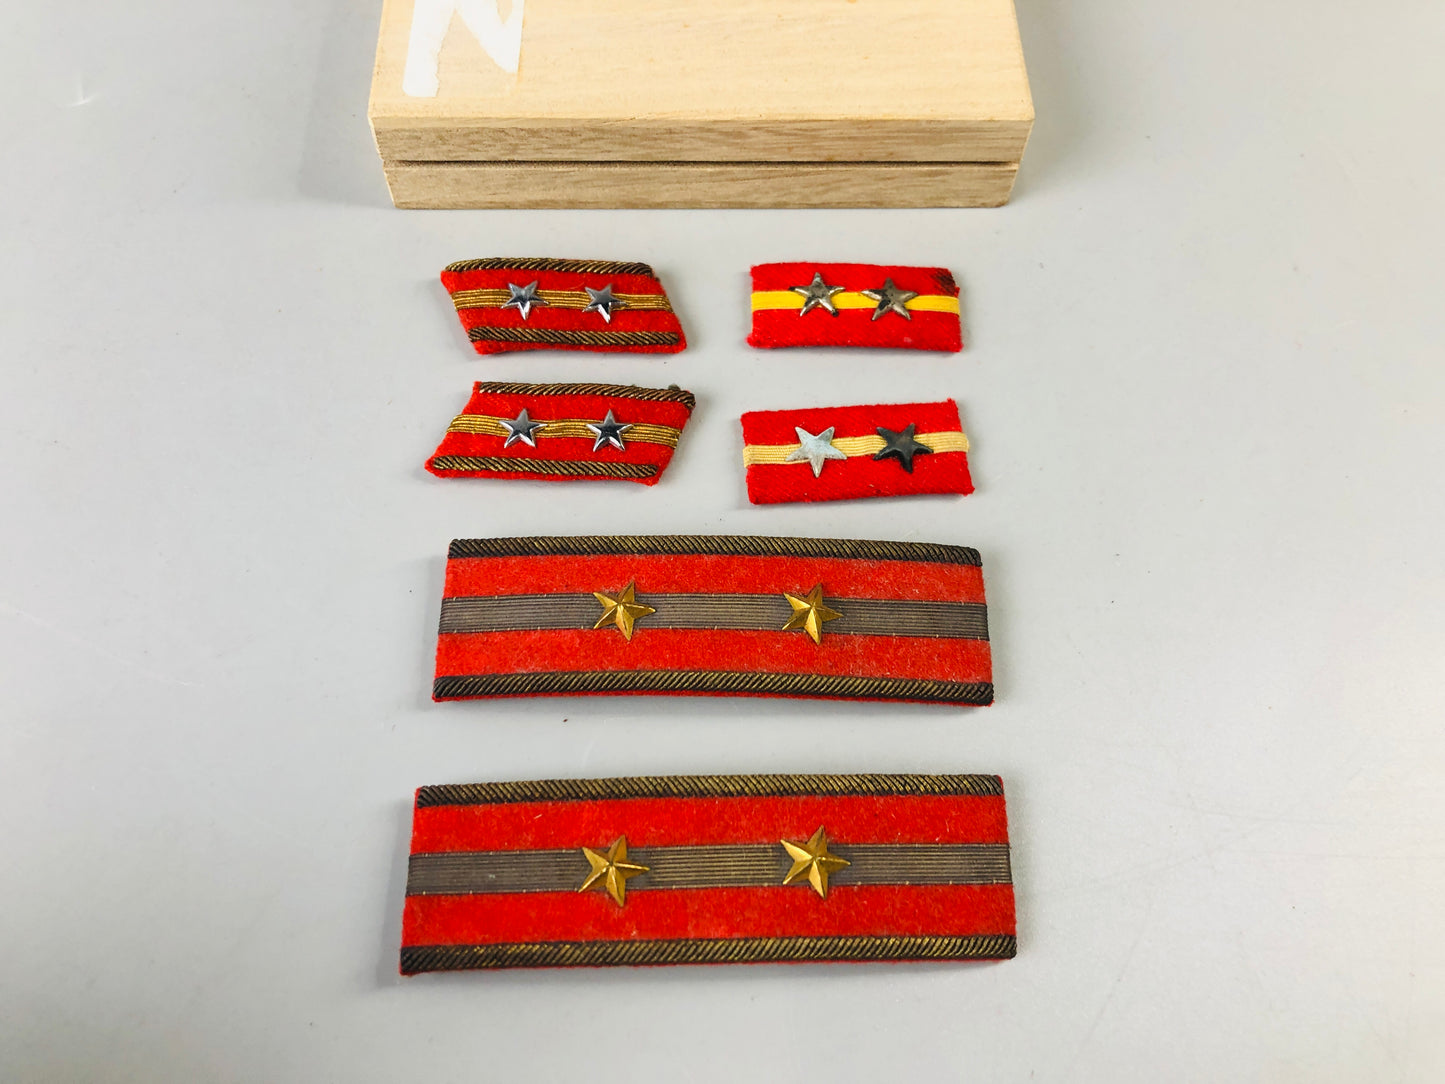 Y7018 [VIDEO] Imperial Japan Army Epaulettes Lapel Pins set of 6 Japanese WW2 vintage